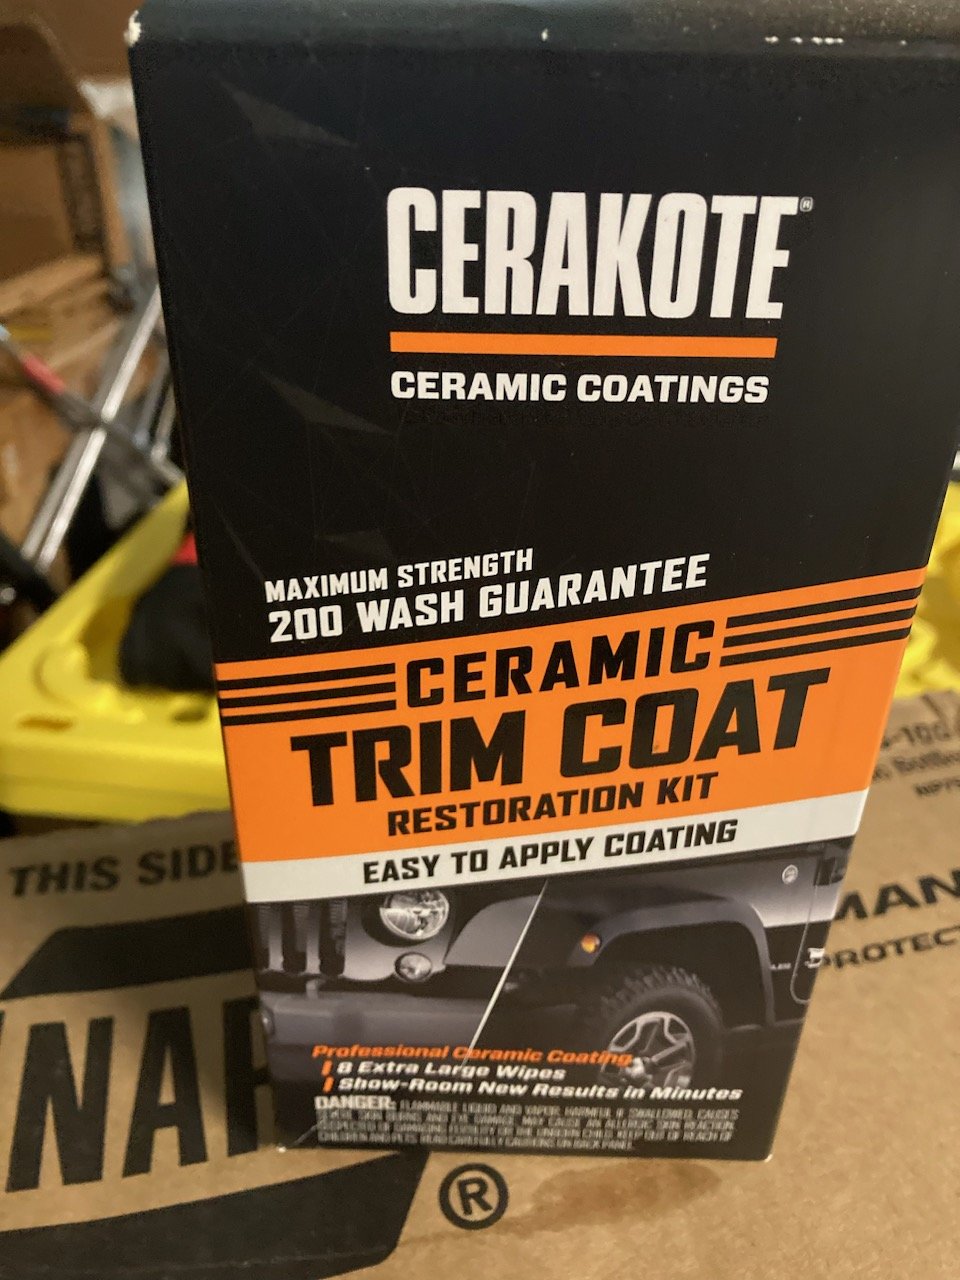 Cerakote Trim Coat is Guaranteed to Last up to 200 Washes - CerakoteCeramics